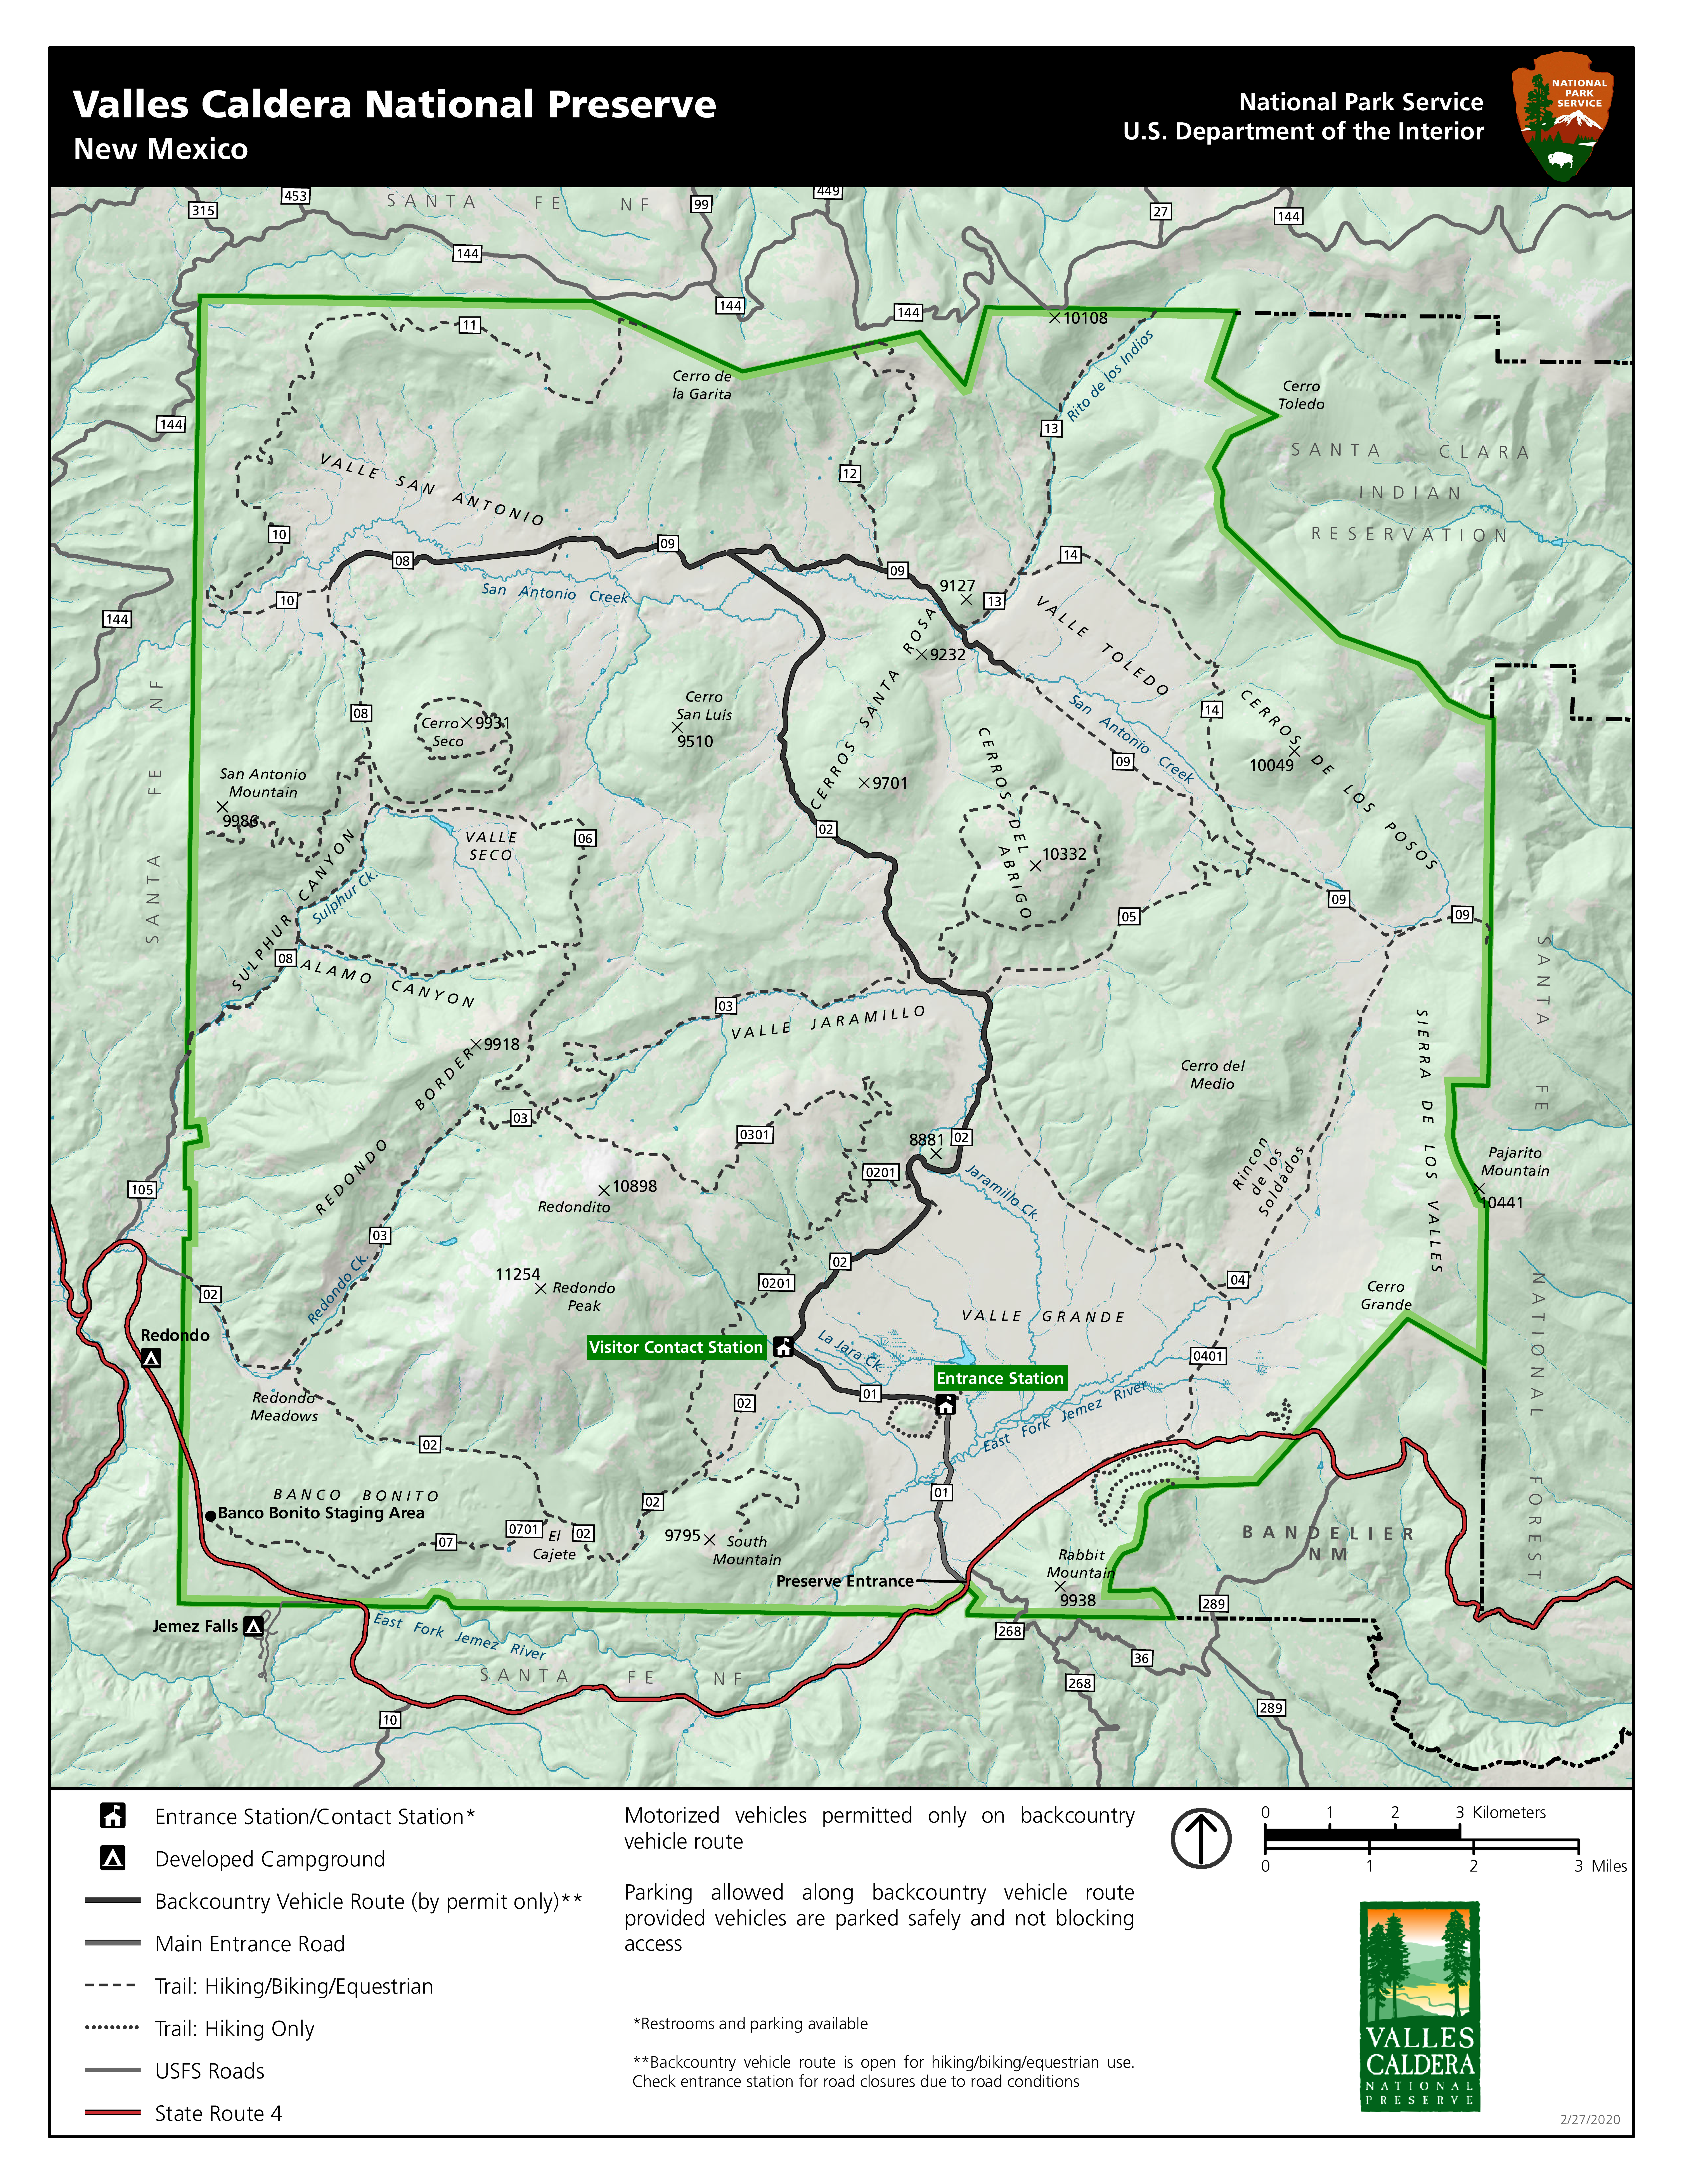 Valles Caldera National Preserve general access map